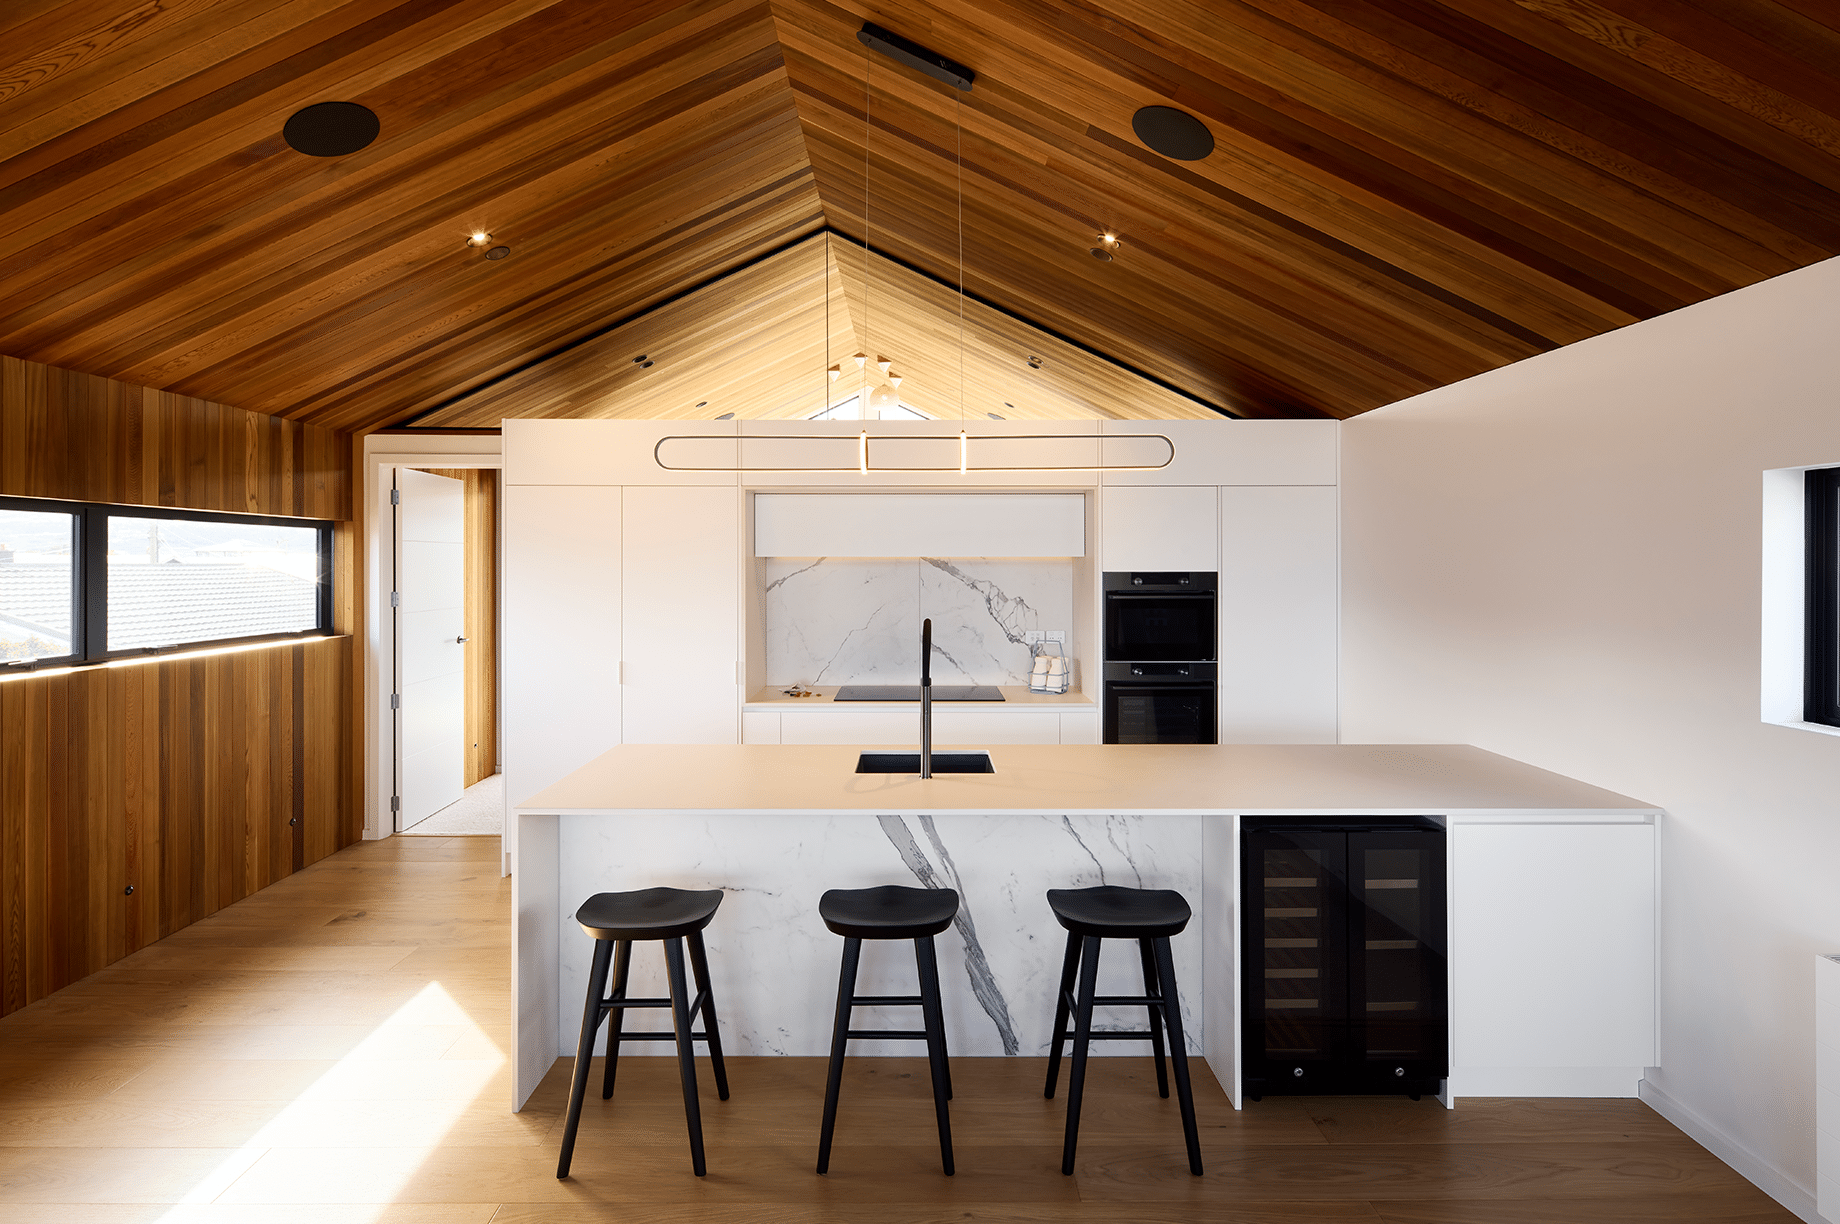 Petone Perfection award-winning show home interior marble kitchen